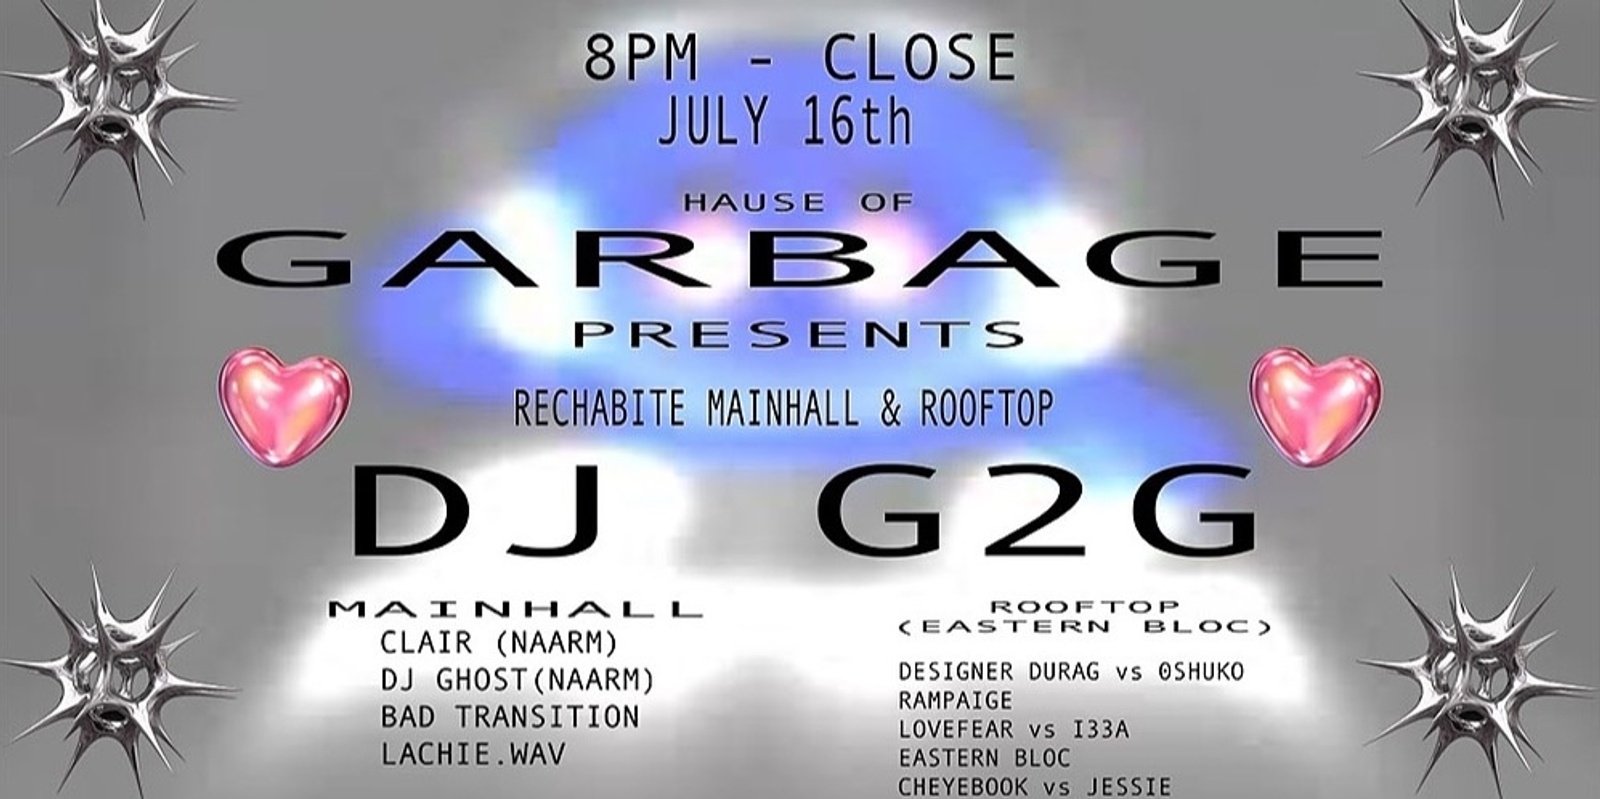 Banner image for Garbage presents - HAUSE OF GARBAGE - DJ G2G